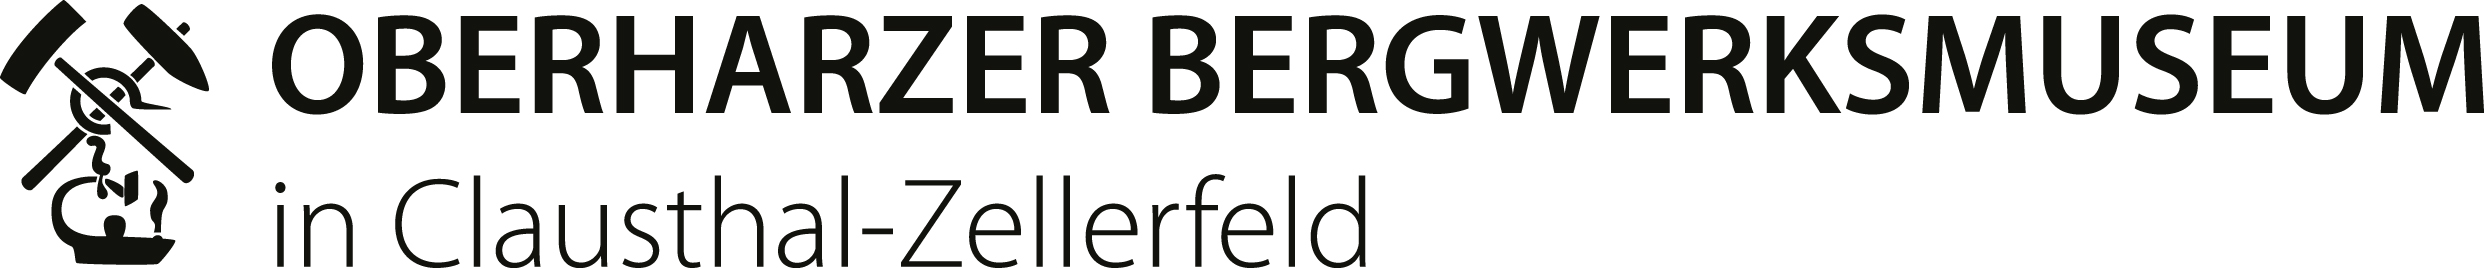 Logo Oberharzer Bergwerksmuseum Clausthal-Zellerfeld